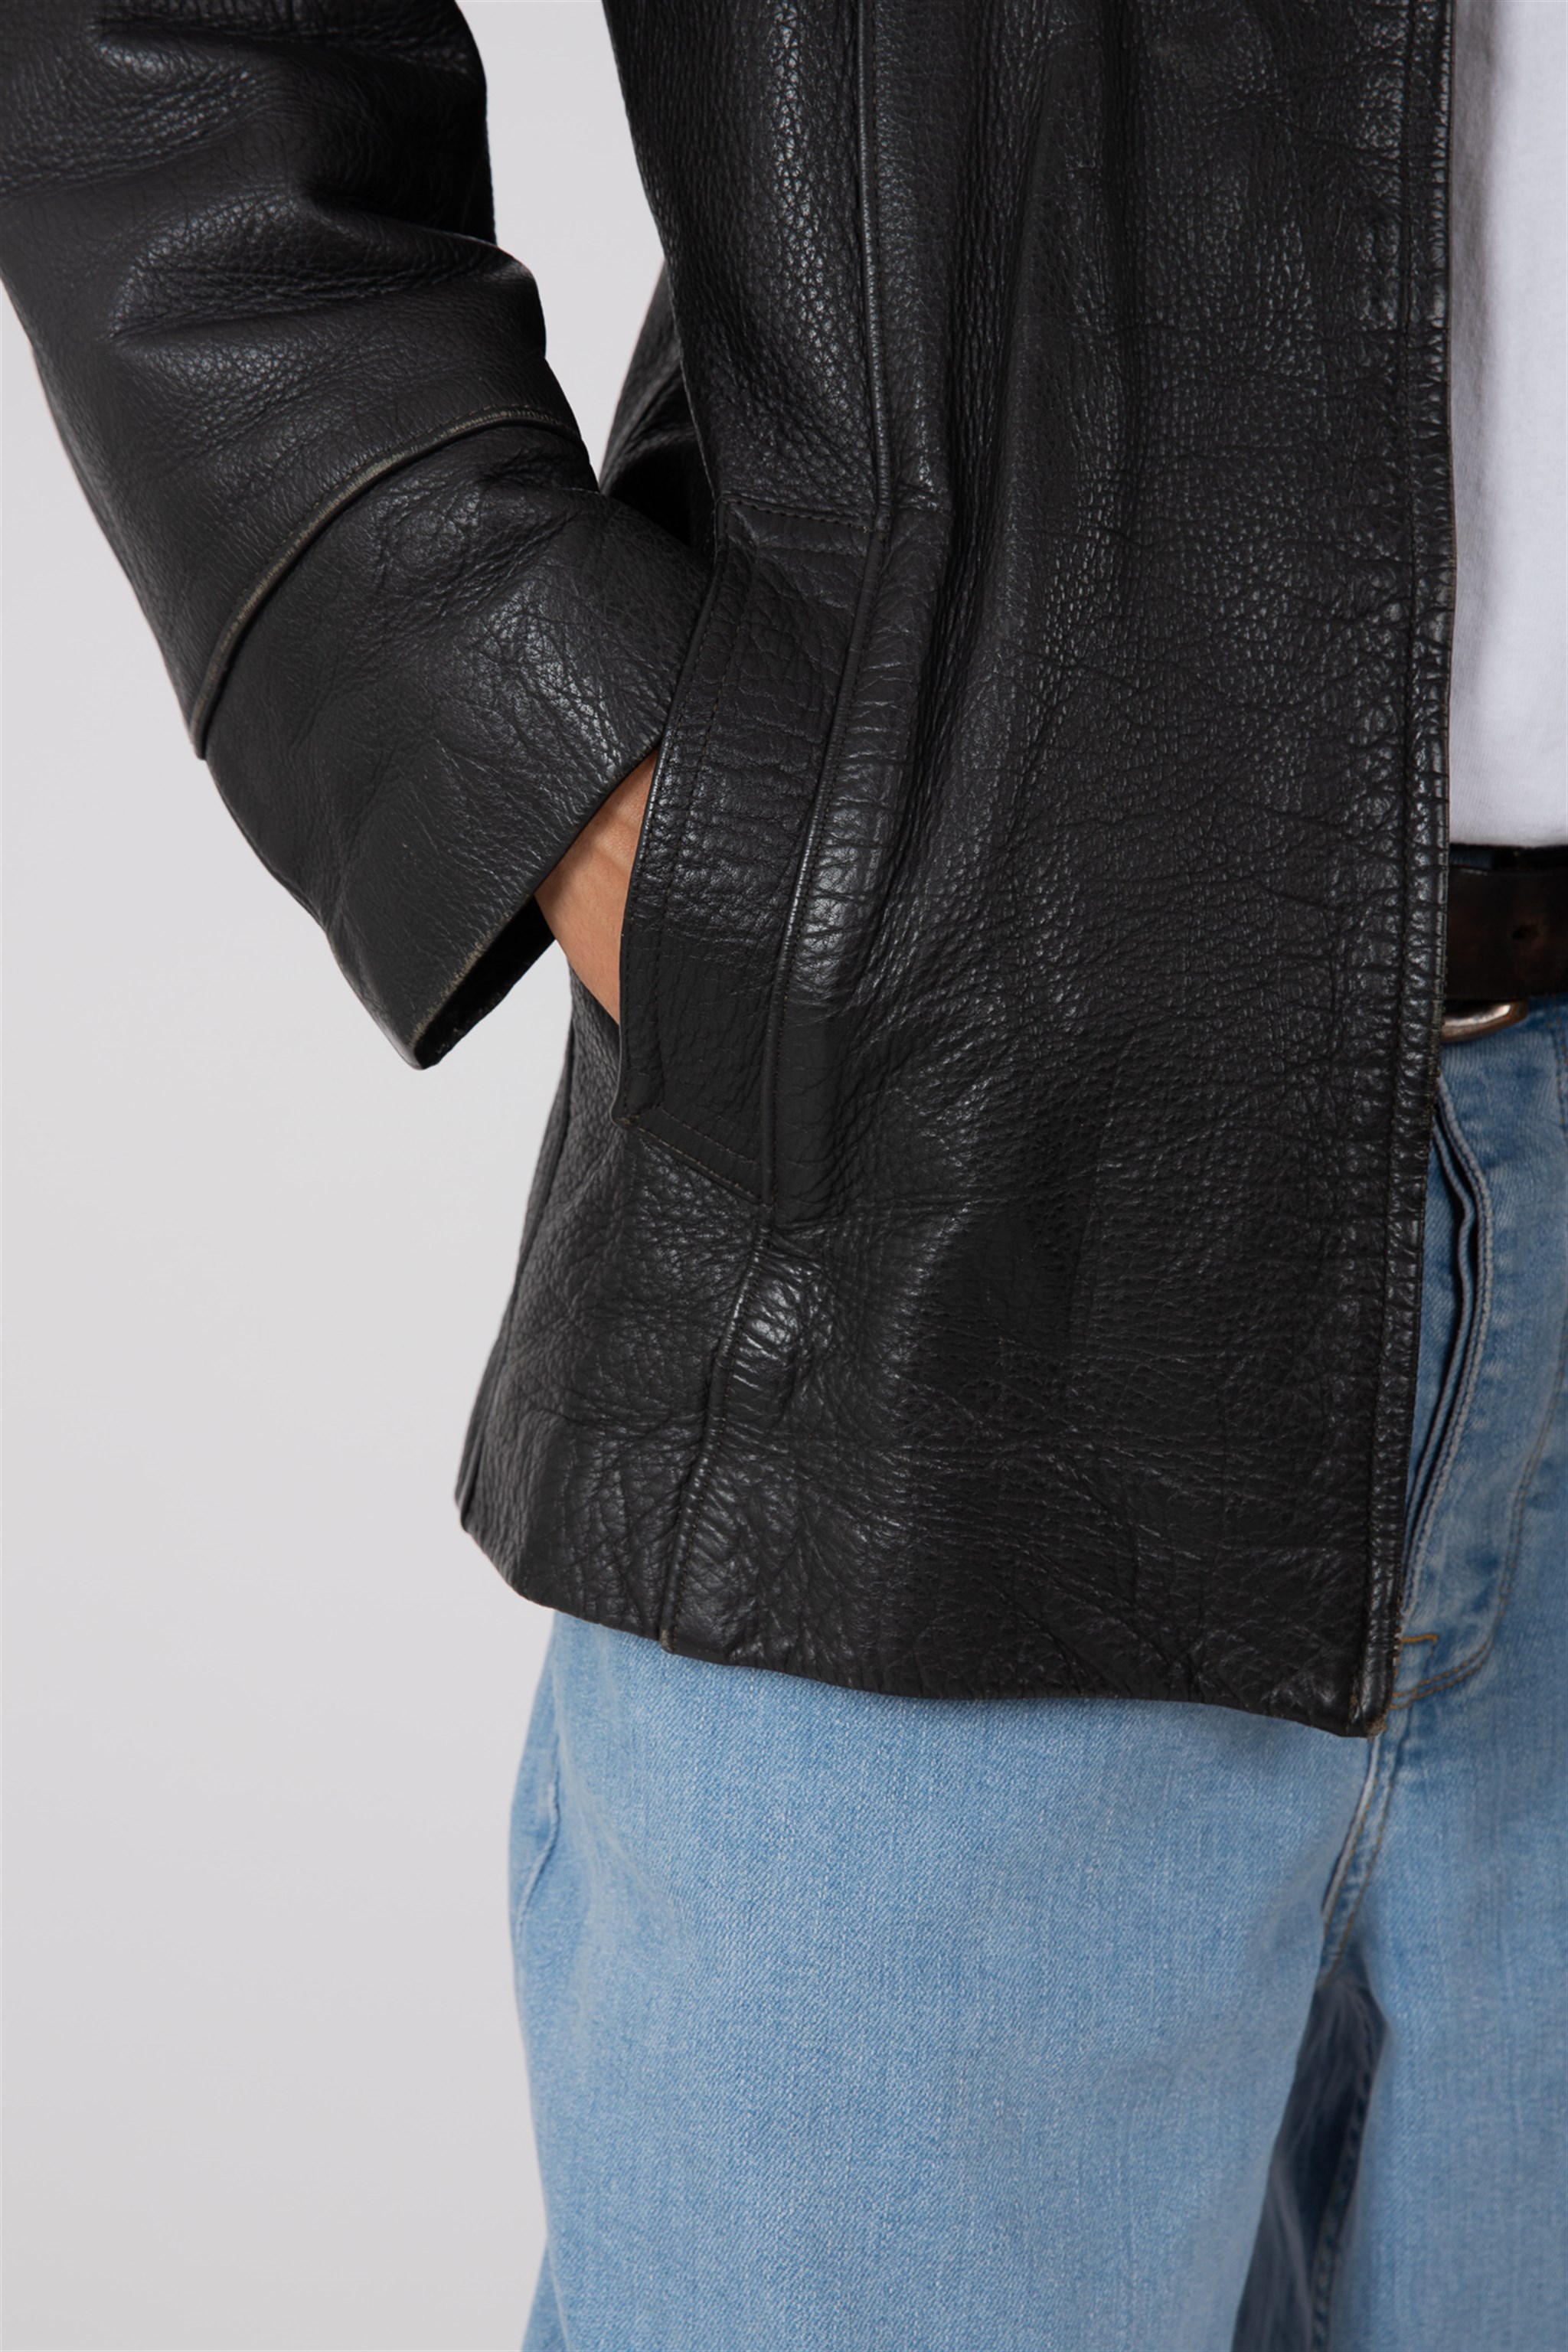 American Heavy Leather Vintage Jacket